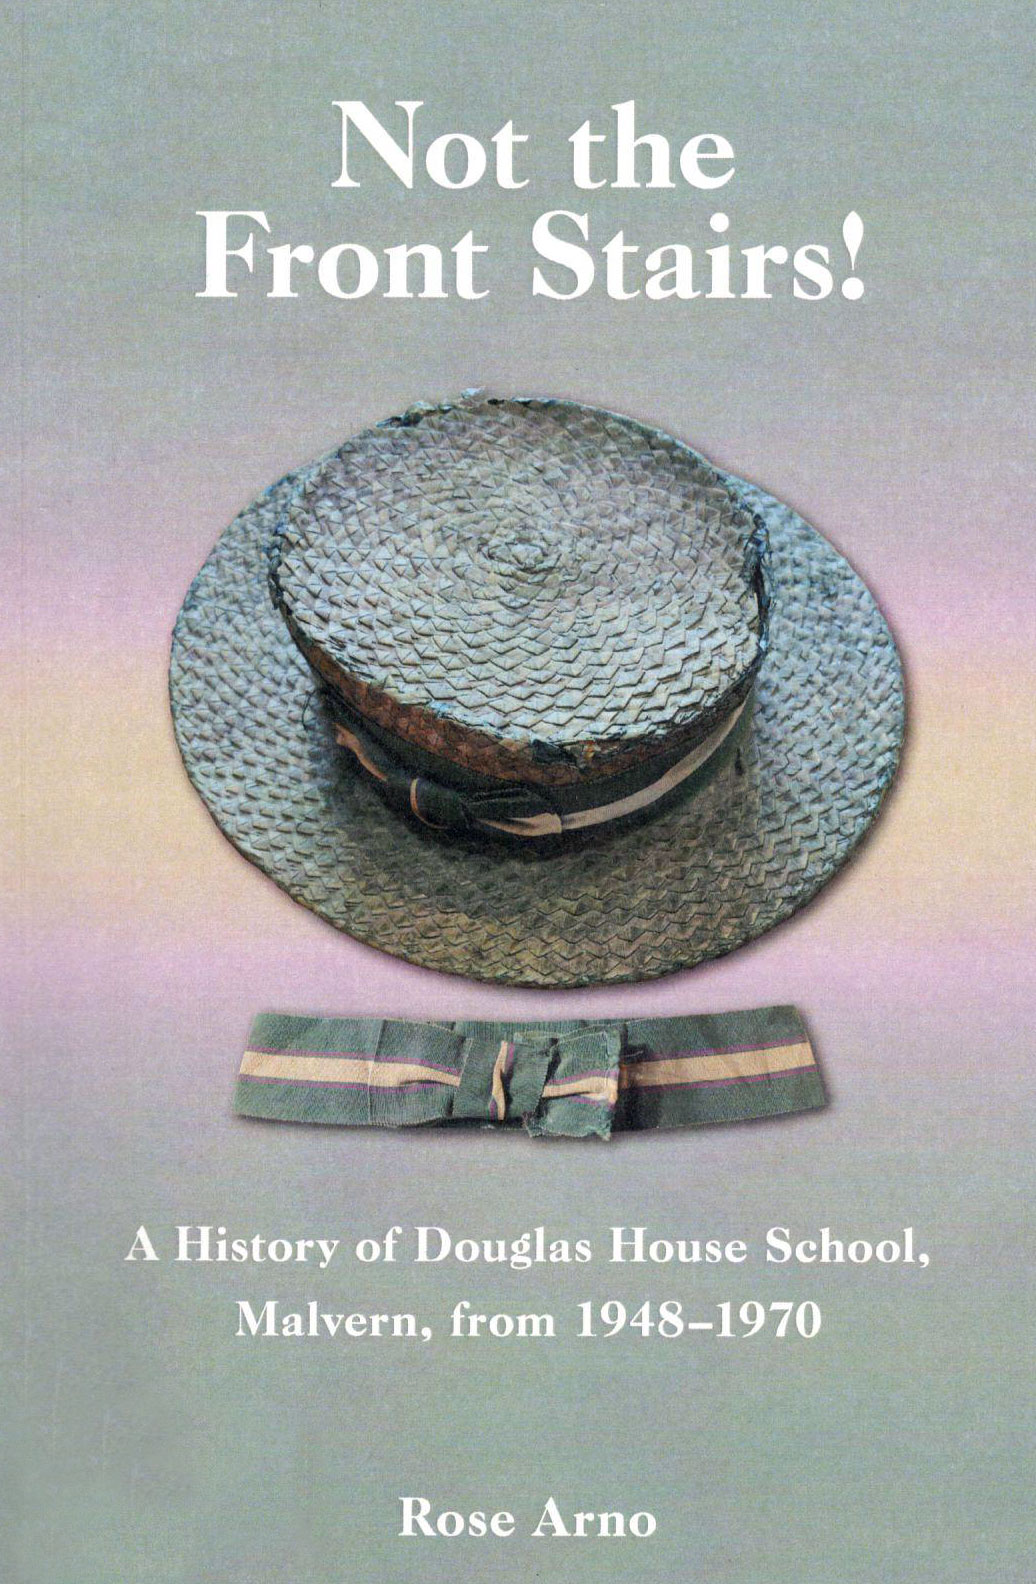 Douglas House school book cover